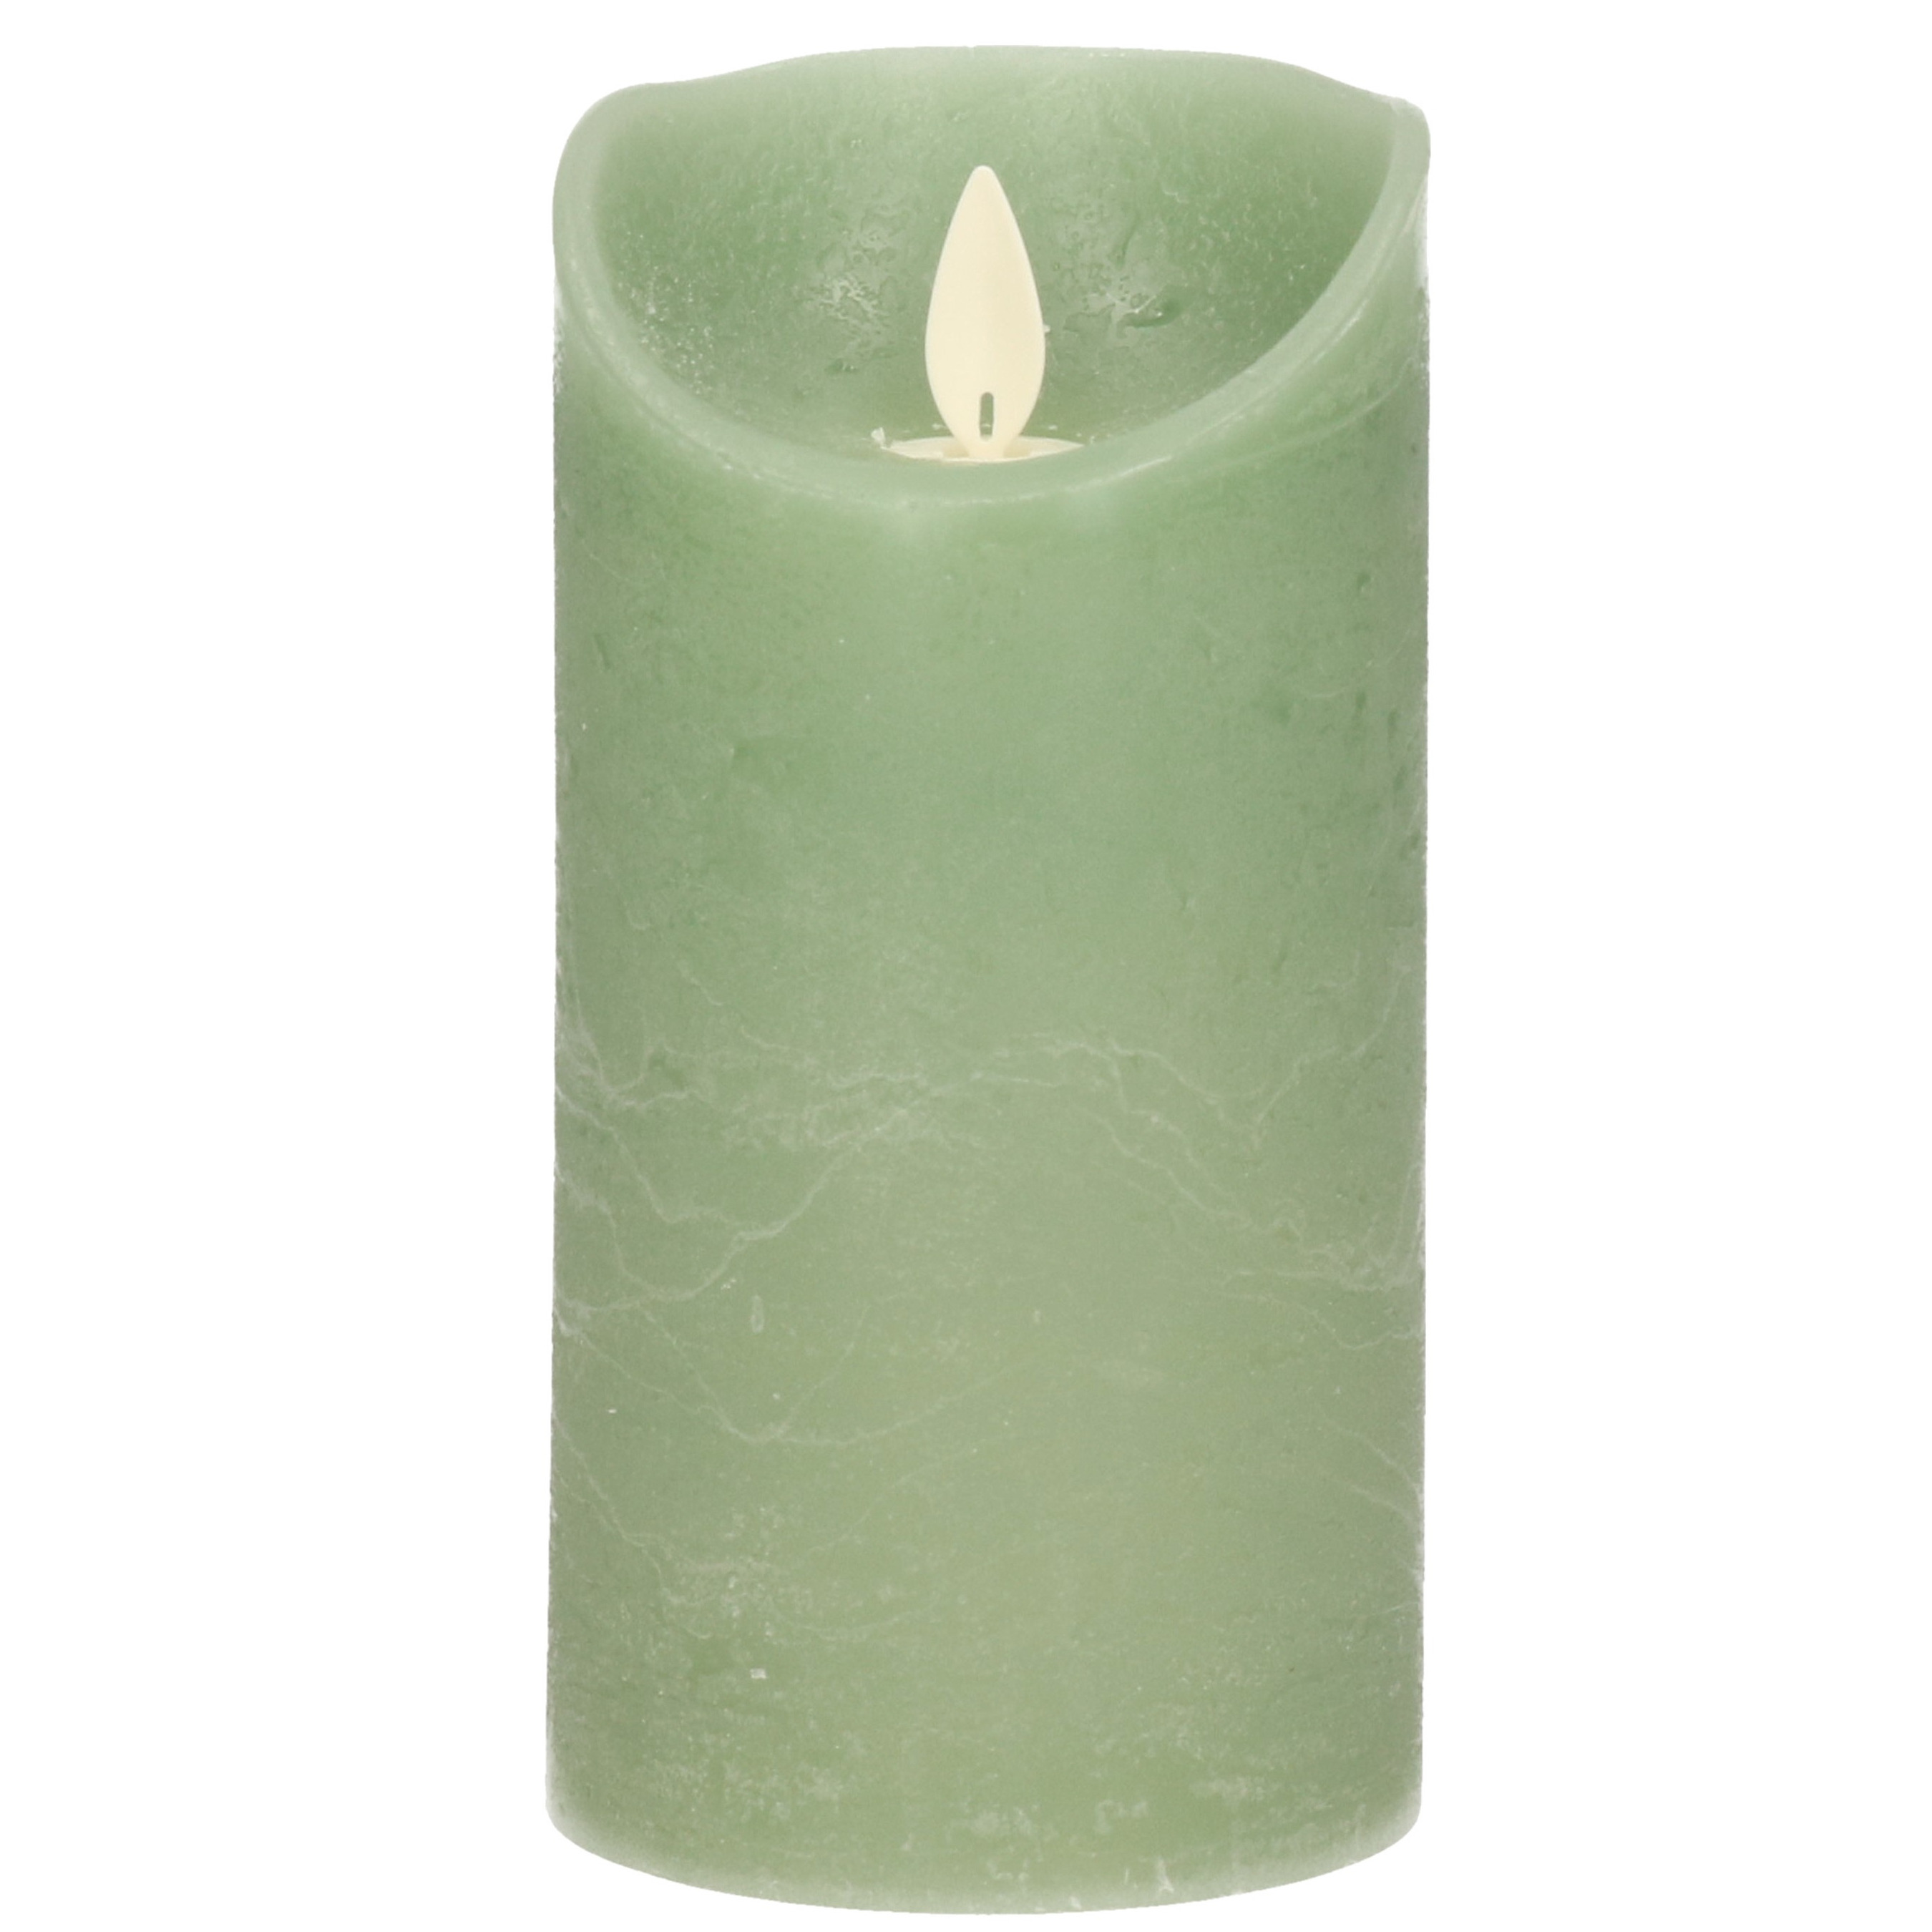 1x Jade groene LED kaarsen / stompkaarsen met bewegende vlam 15 cm